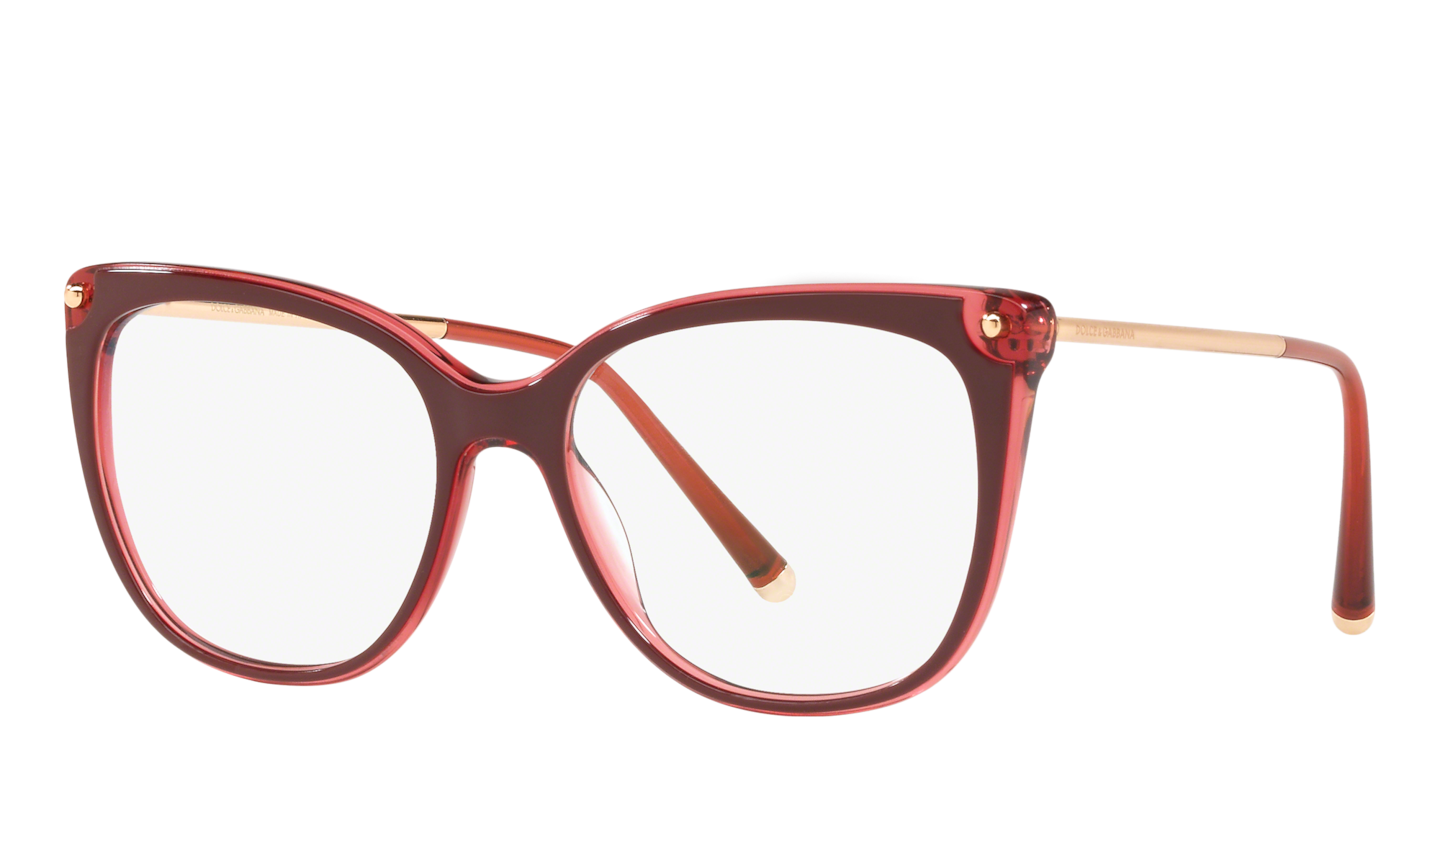 Dolce & Gabbana DG3294 Red Eyeglasses | Glasses.com® | Free Shipping